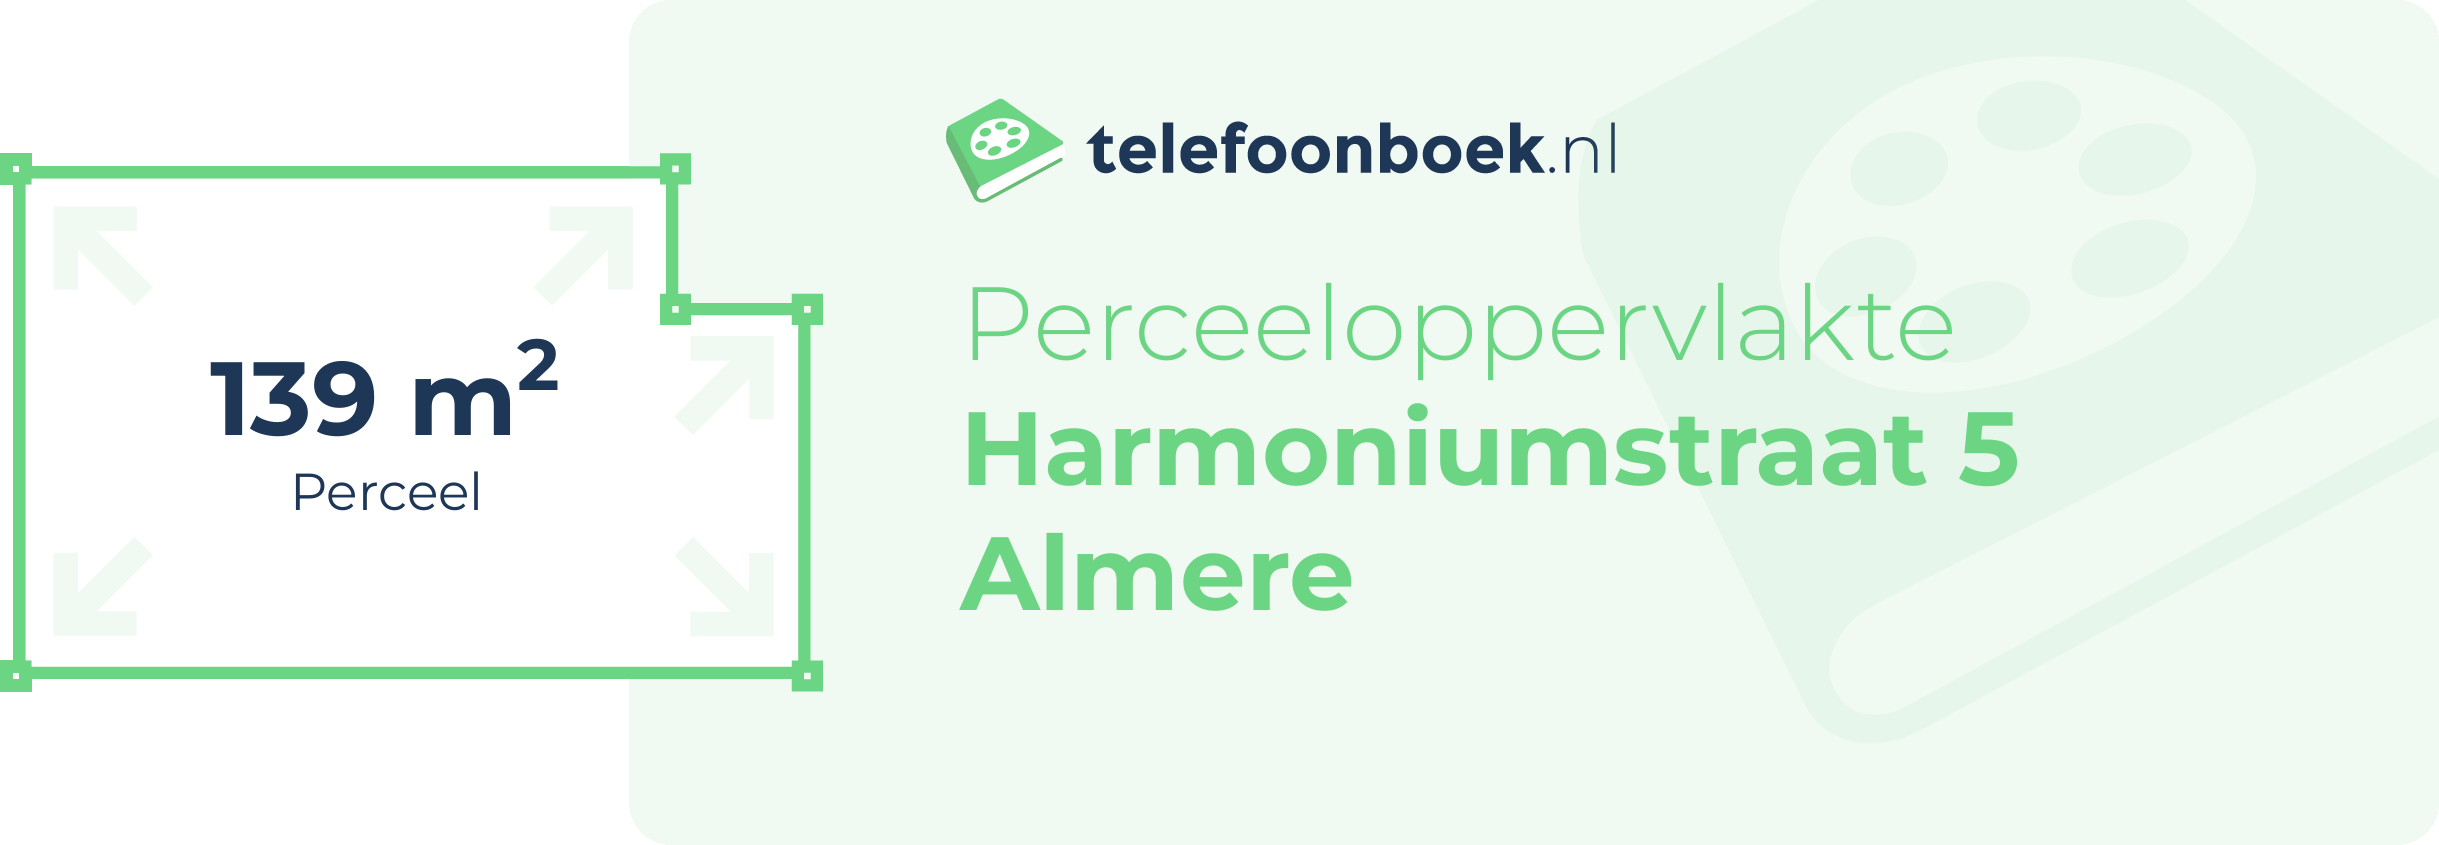 Perceeloppervlakte Harmoniumstraat 5 Almere